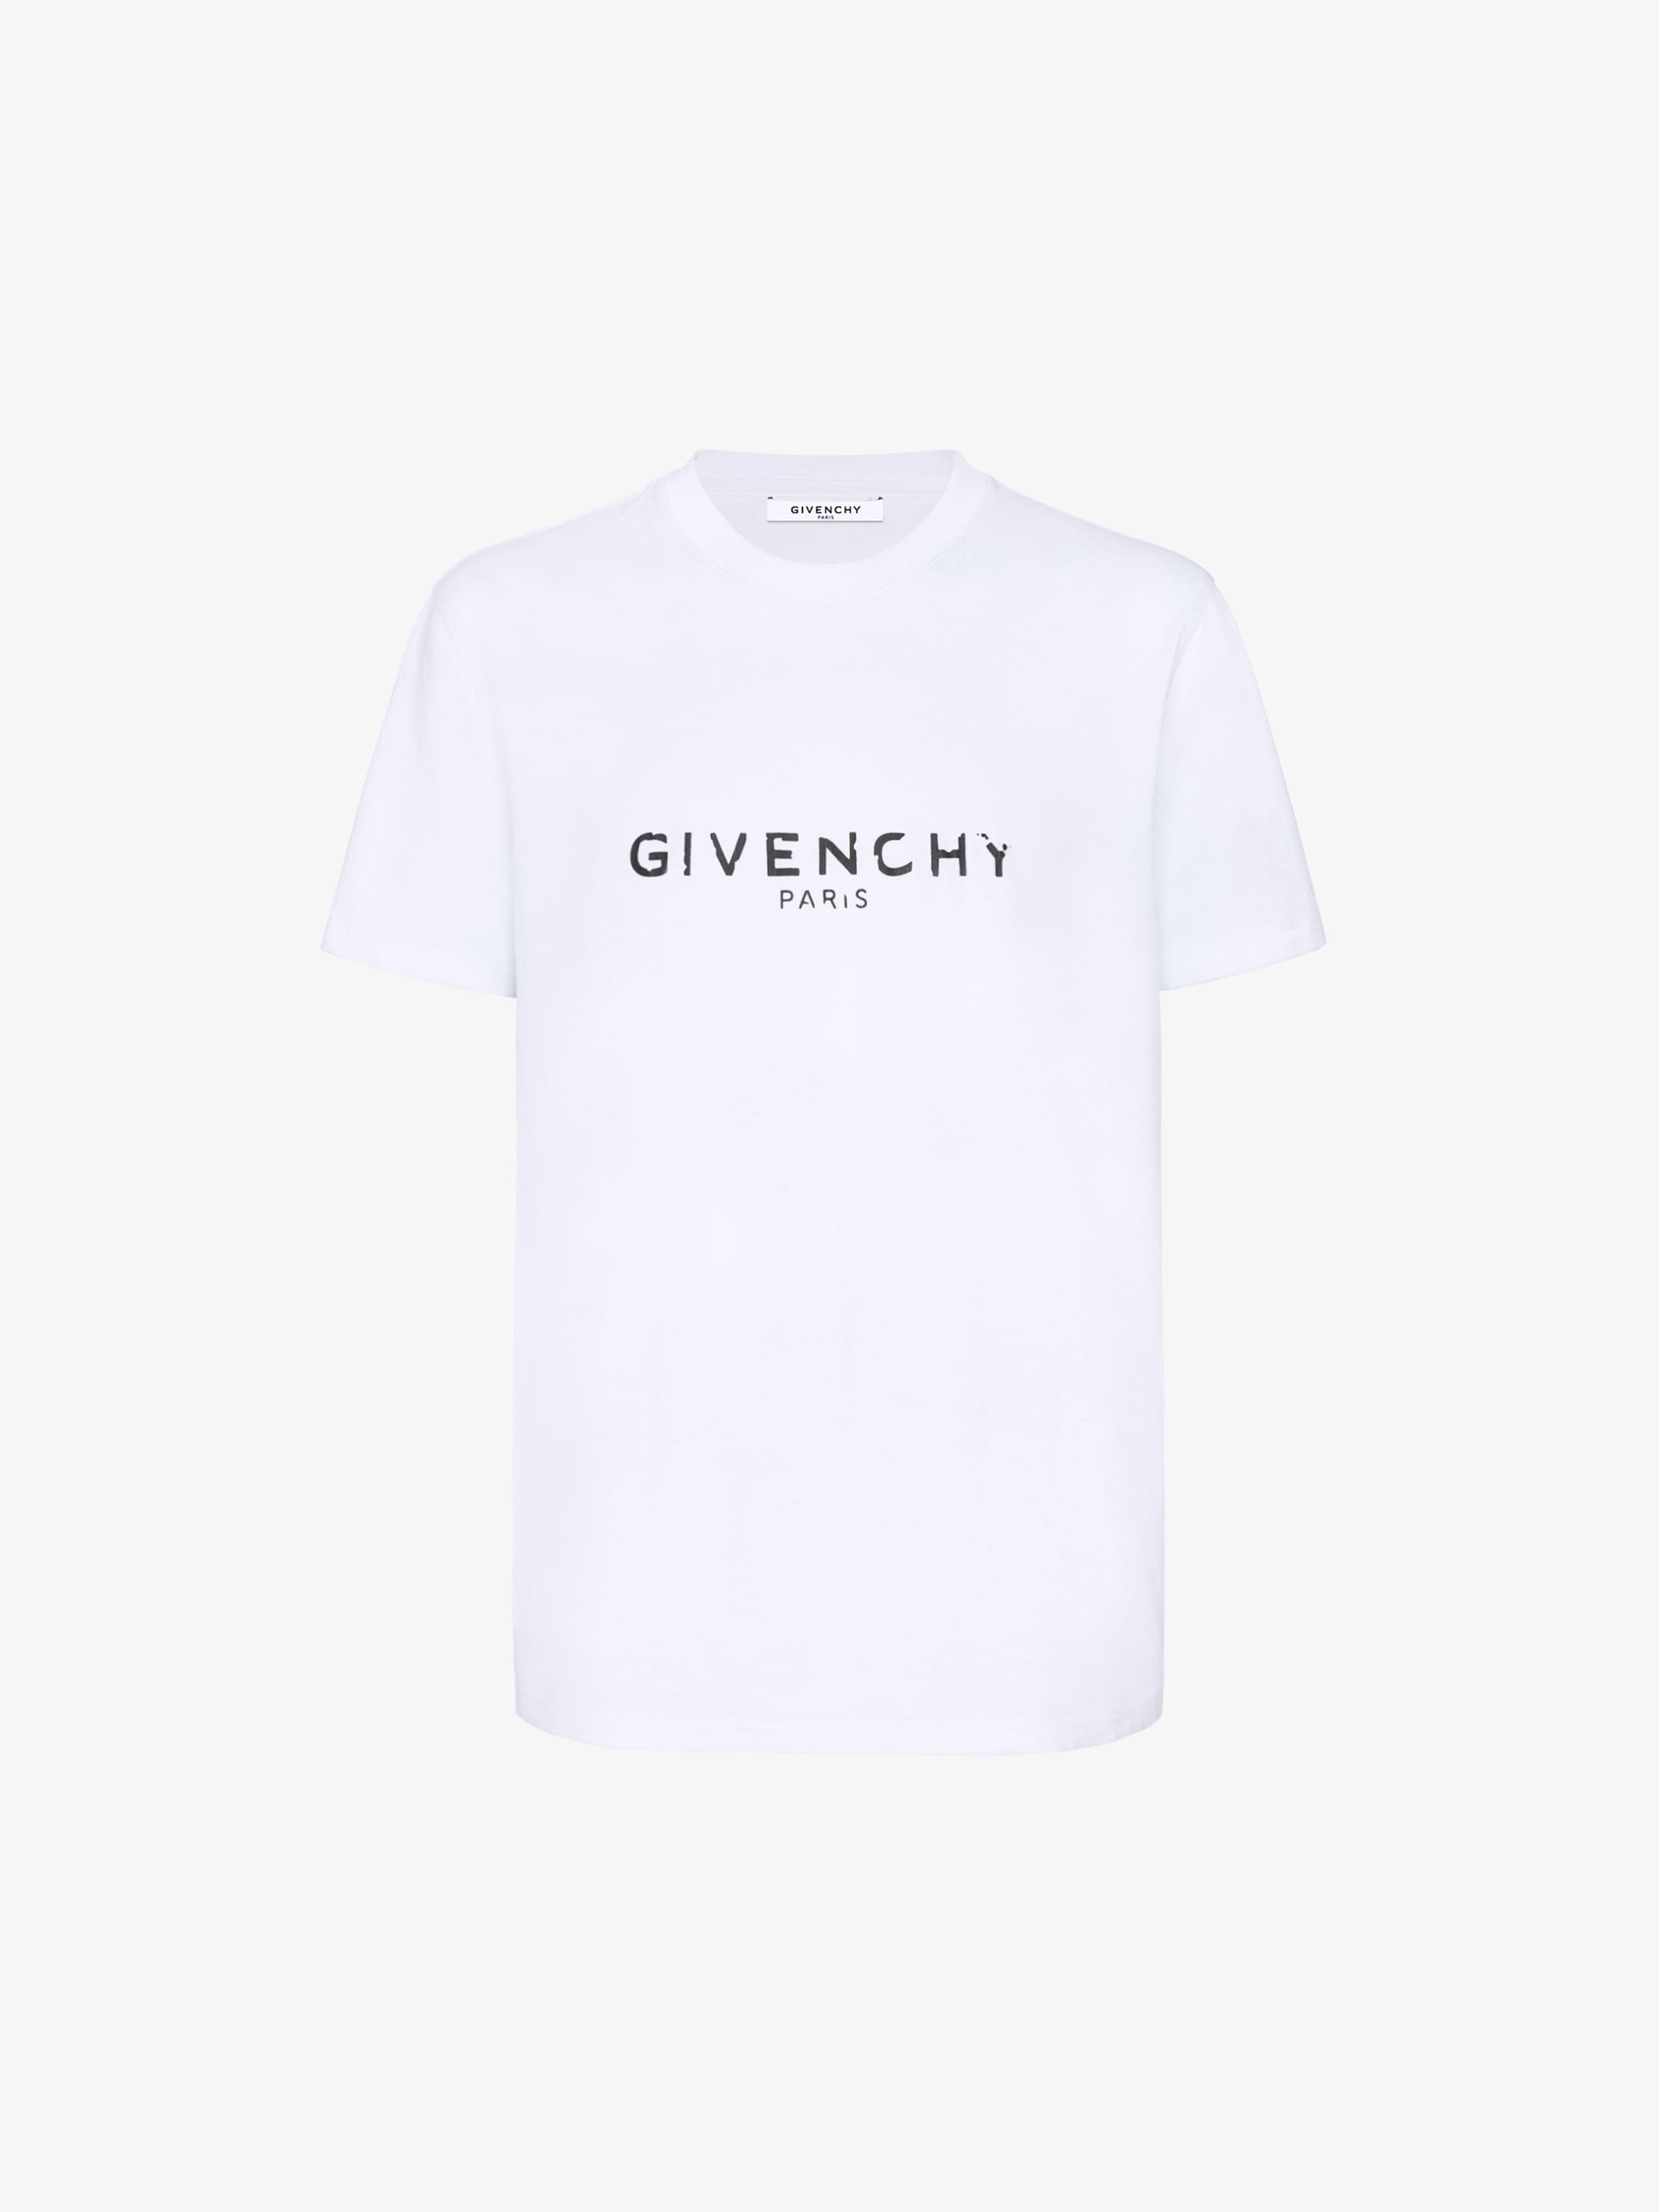 Blurred GIVENCHY PARIS T-shirt | GIVENCHY Paris